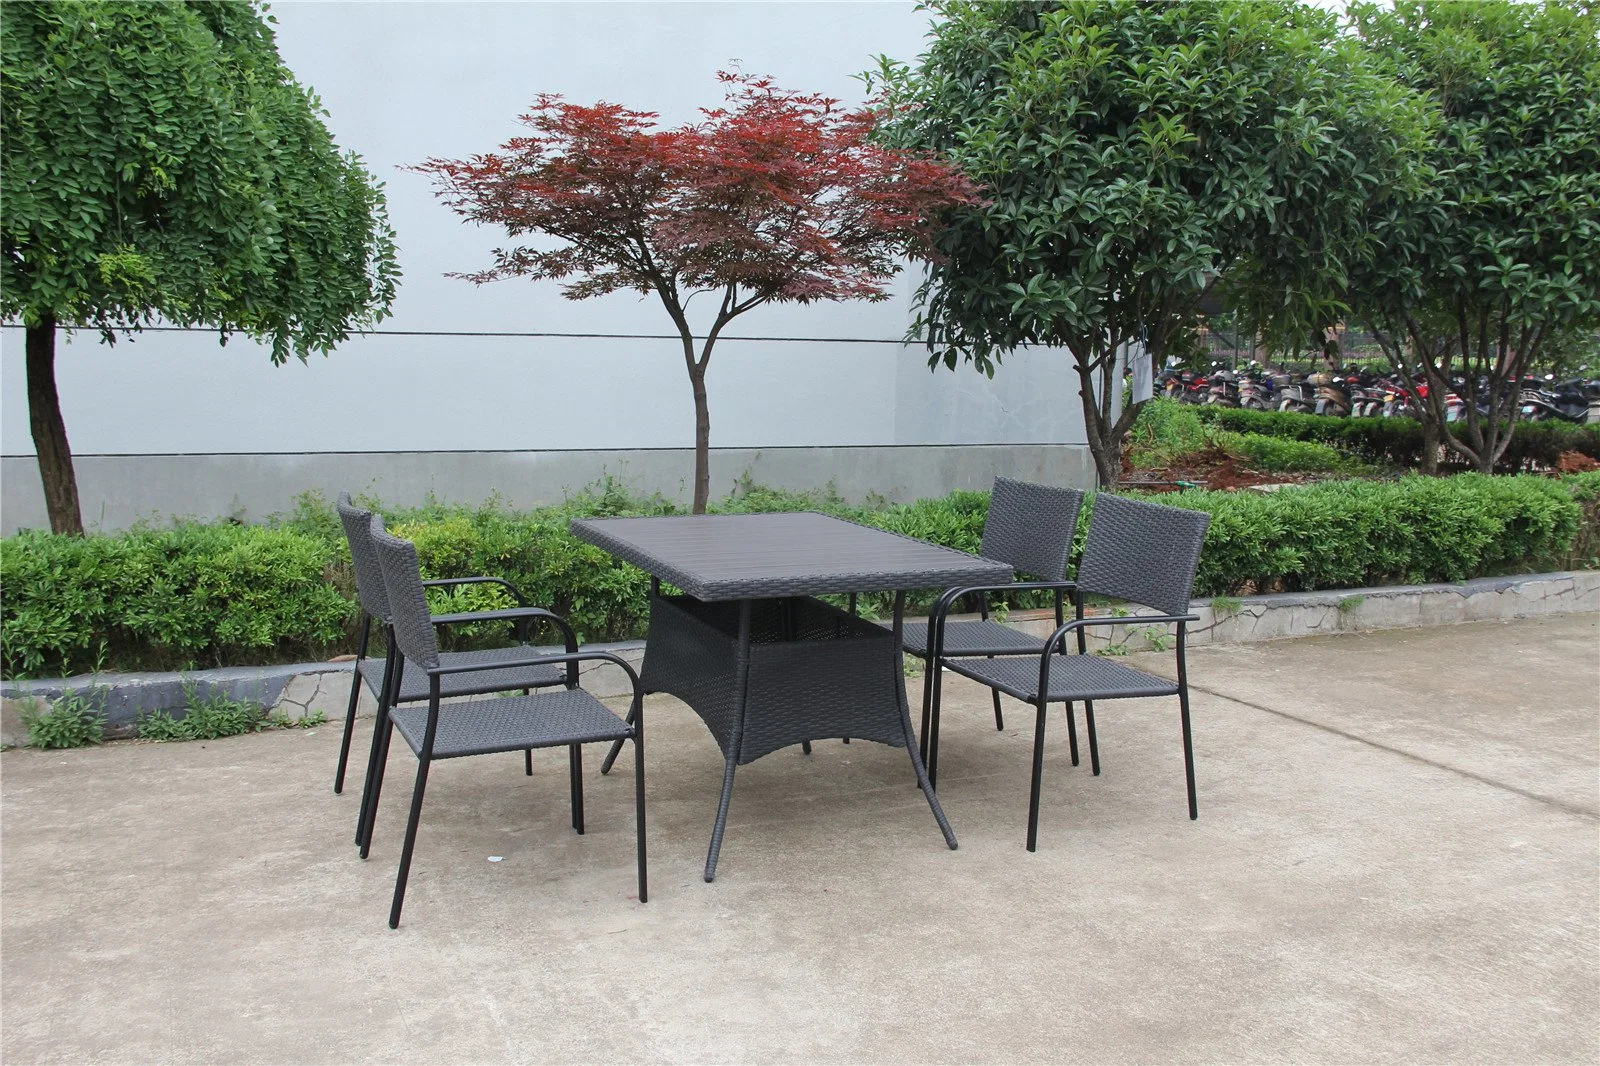 Muebles de comedor al aire libre mimbre silla comedor conjunto de mesa